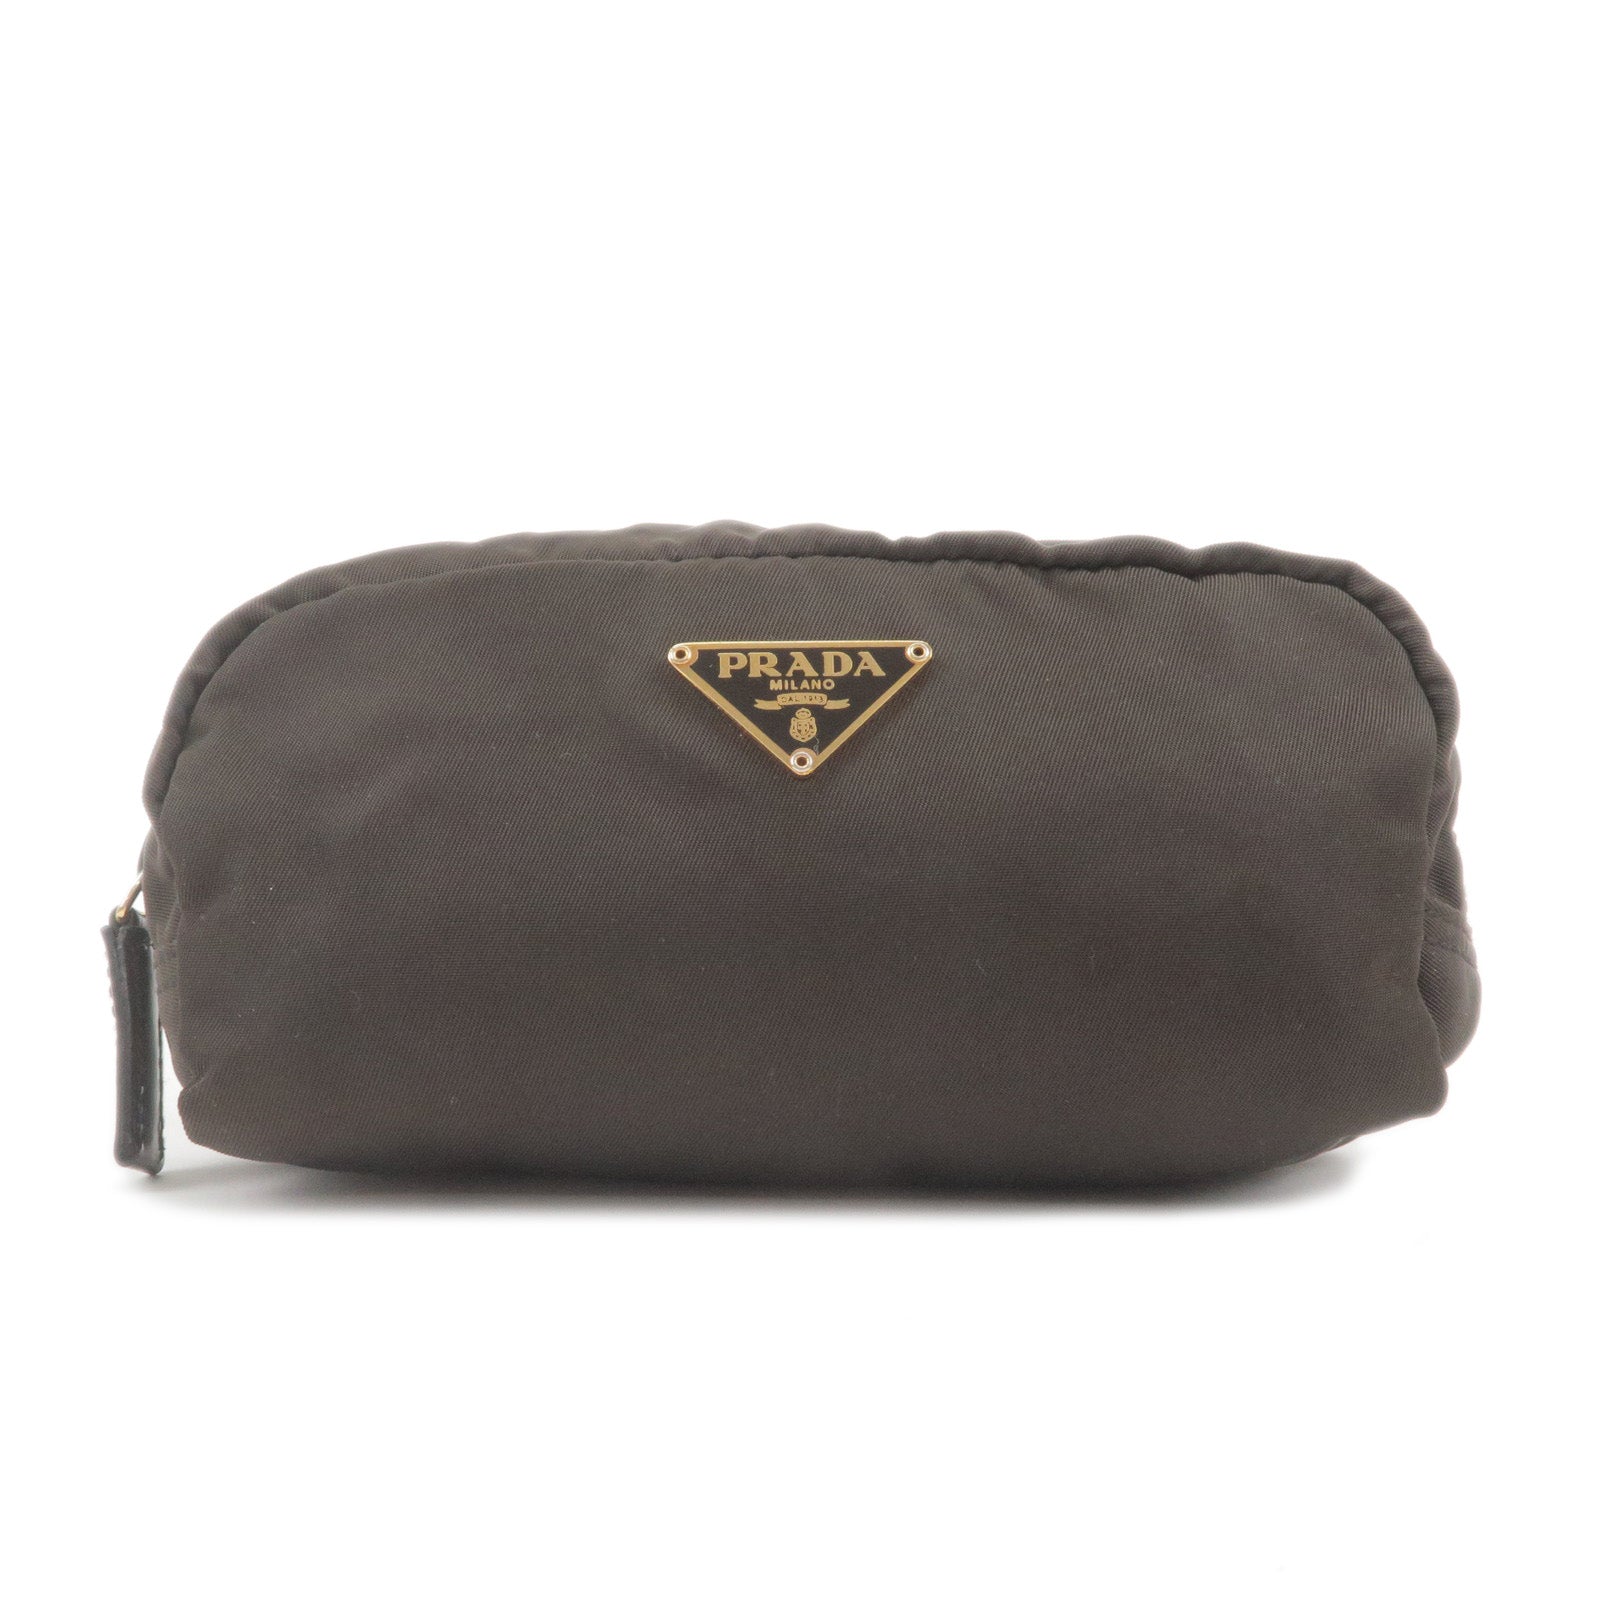 PRADA-Logo-Nylon-Leather-Pouch-Cosmetic-Bag-Brown-1N0175